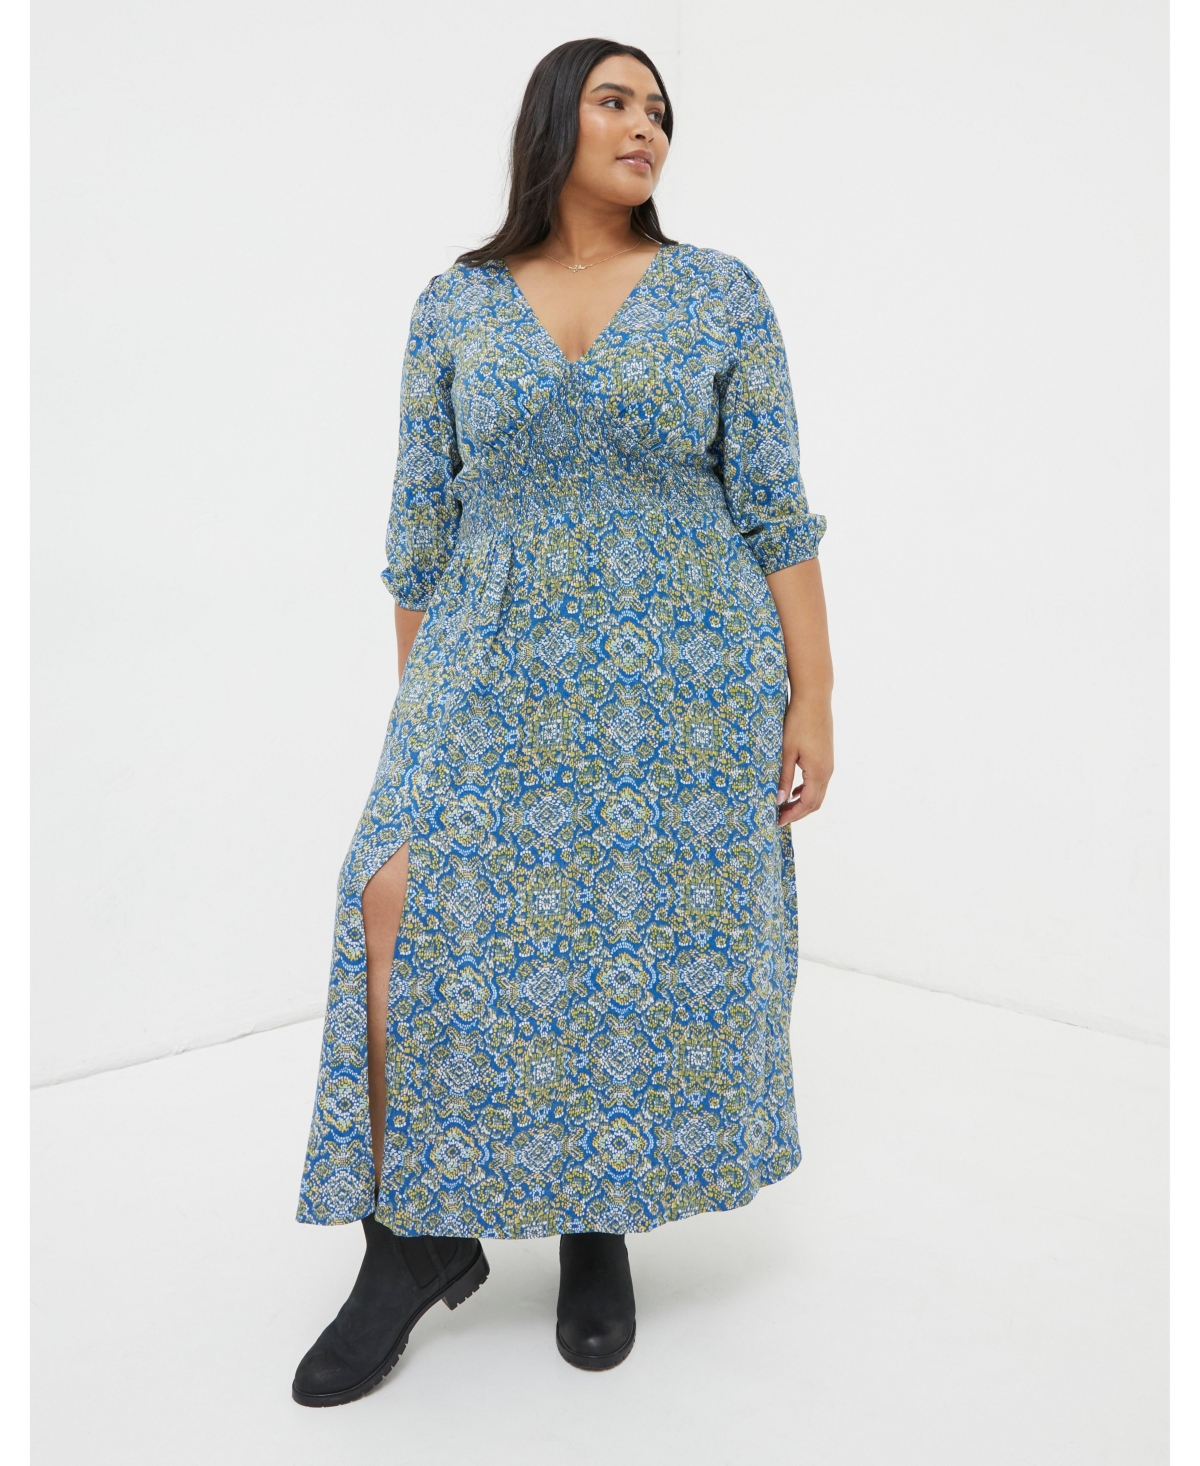 Women's Plus Size Rene Aztec Texture Midi Dress - Bright blue